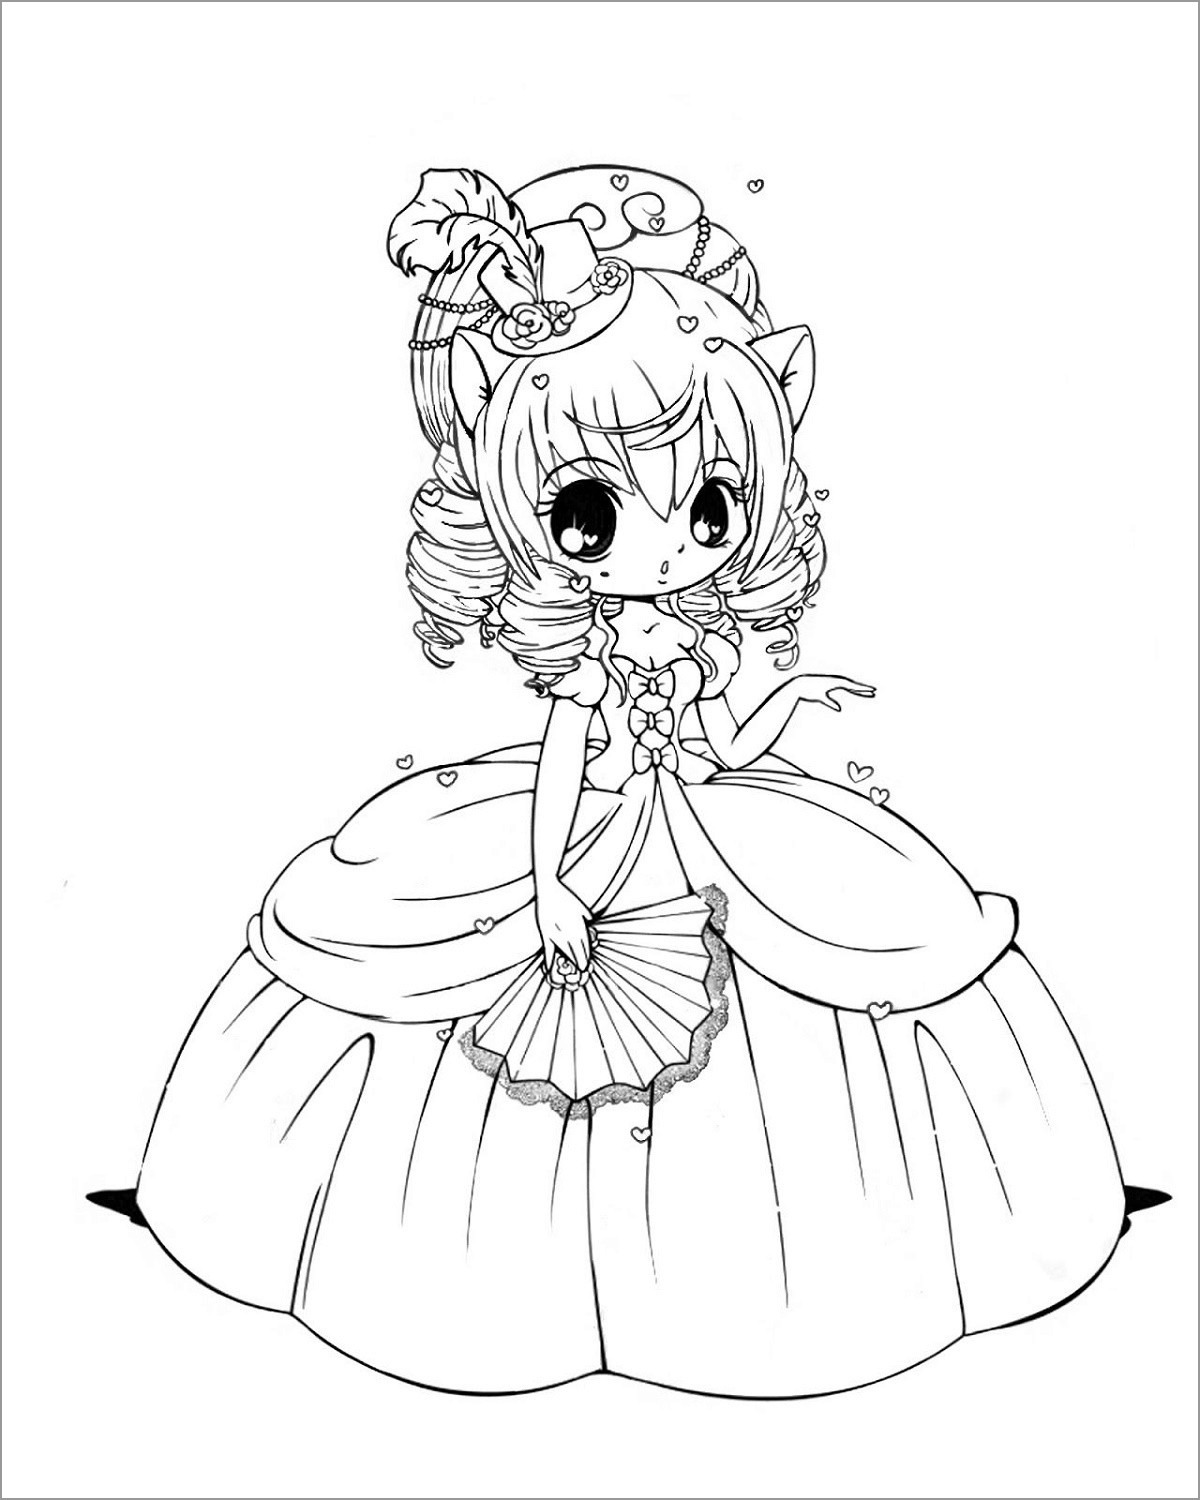 Chibi Cute Disney Princess Coloring Page   ColoringBay